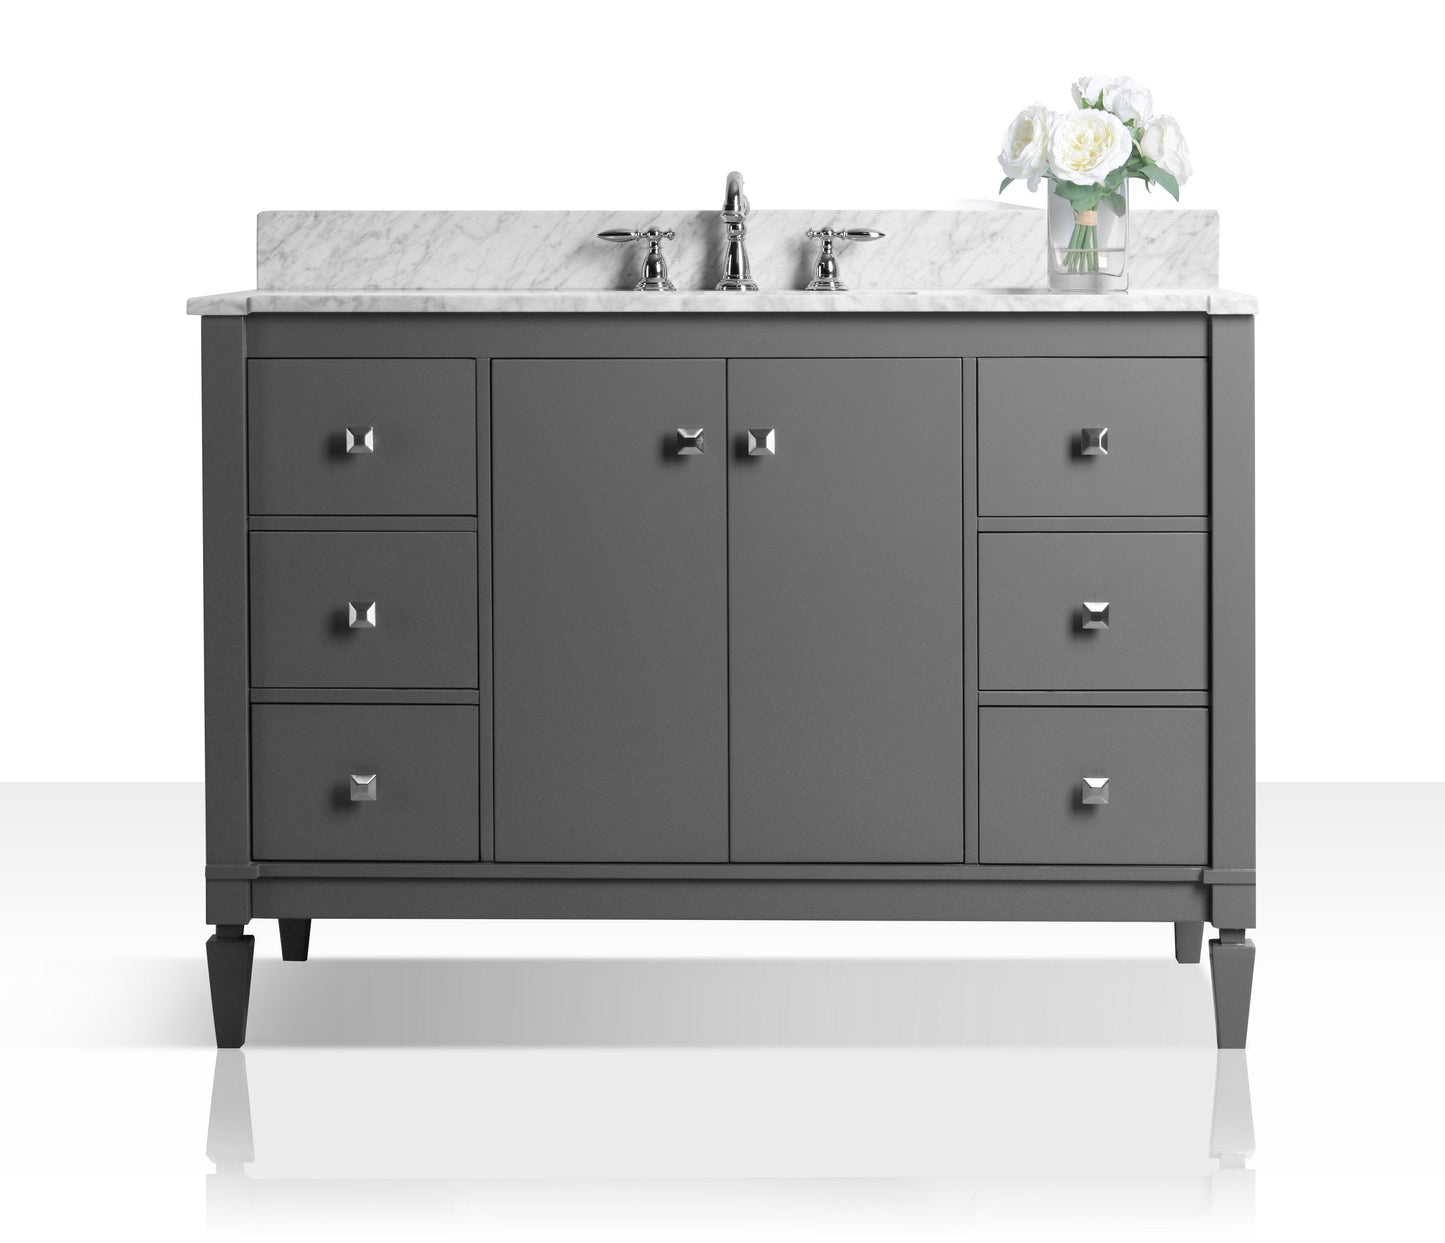 Ancerra Designs Kayleigh 48 in. Bath Vanity Set in Sapphire Gray